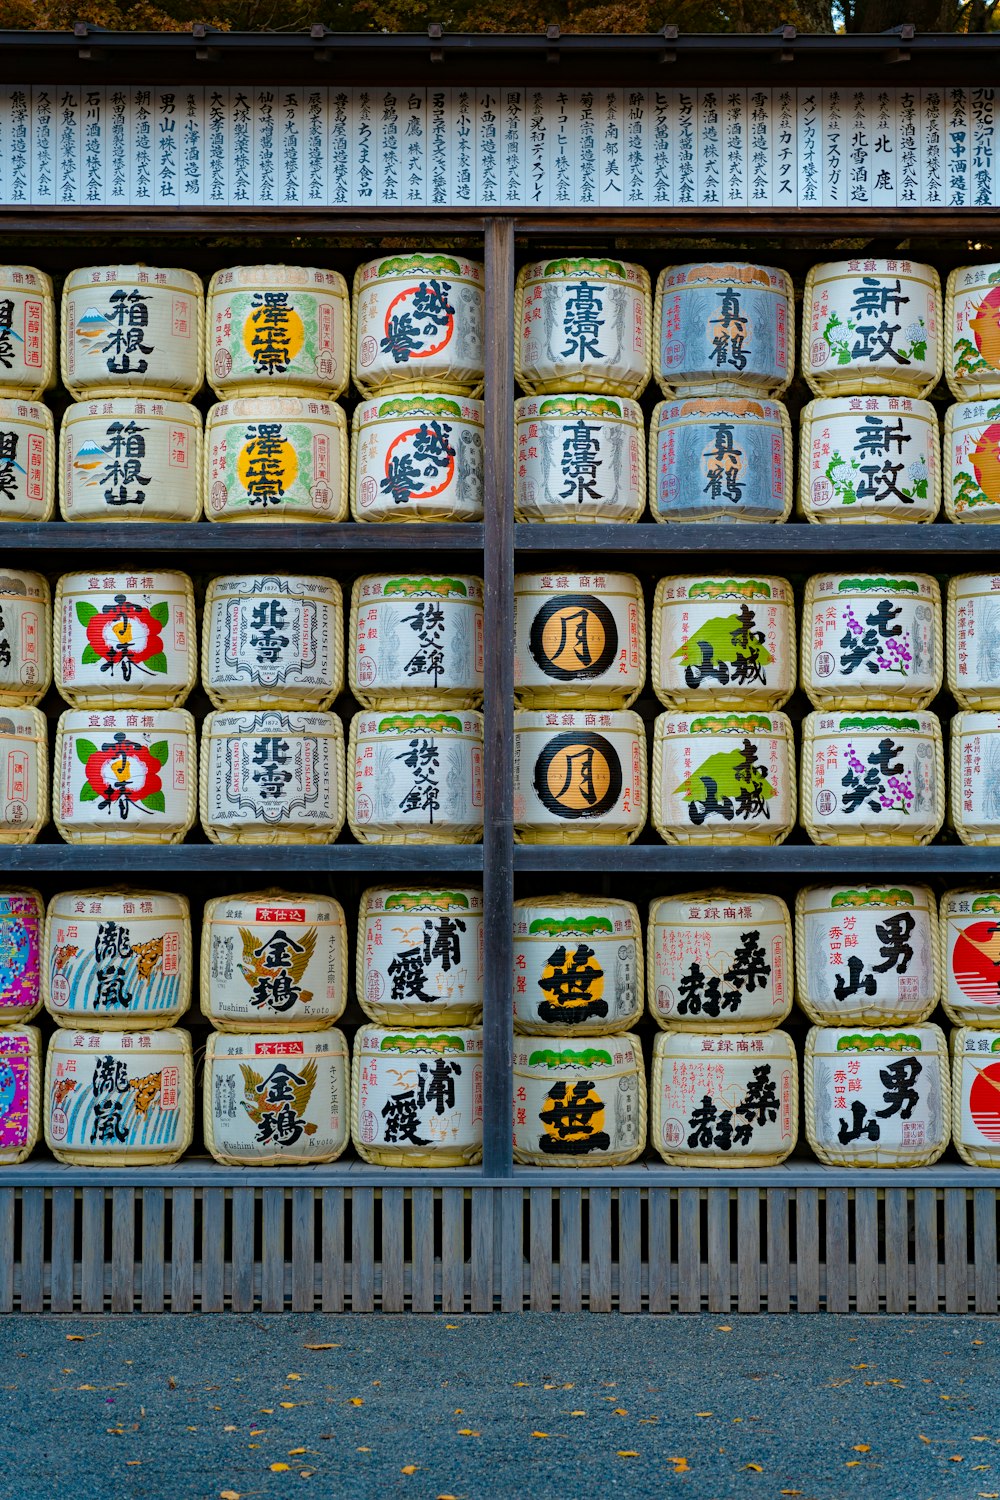 a display of various types of teas on a sidewalk